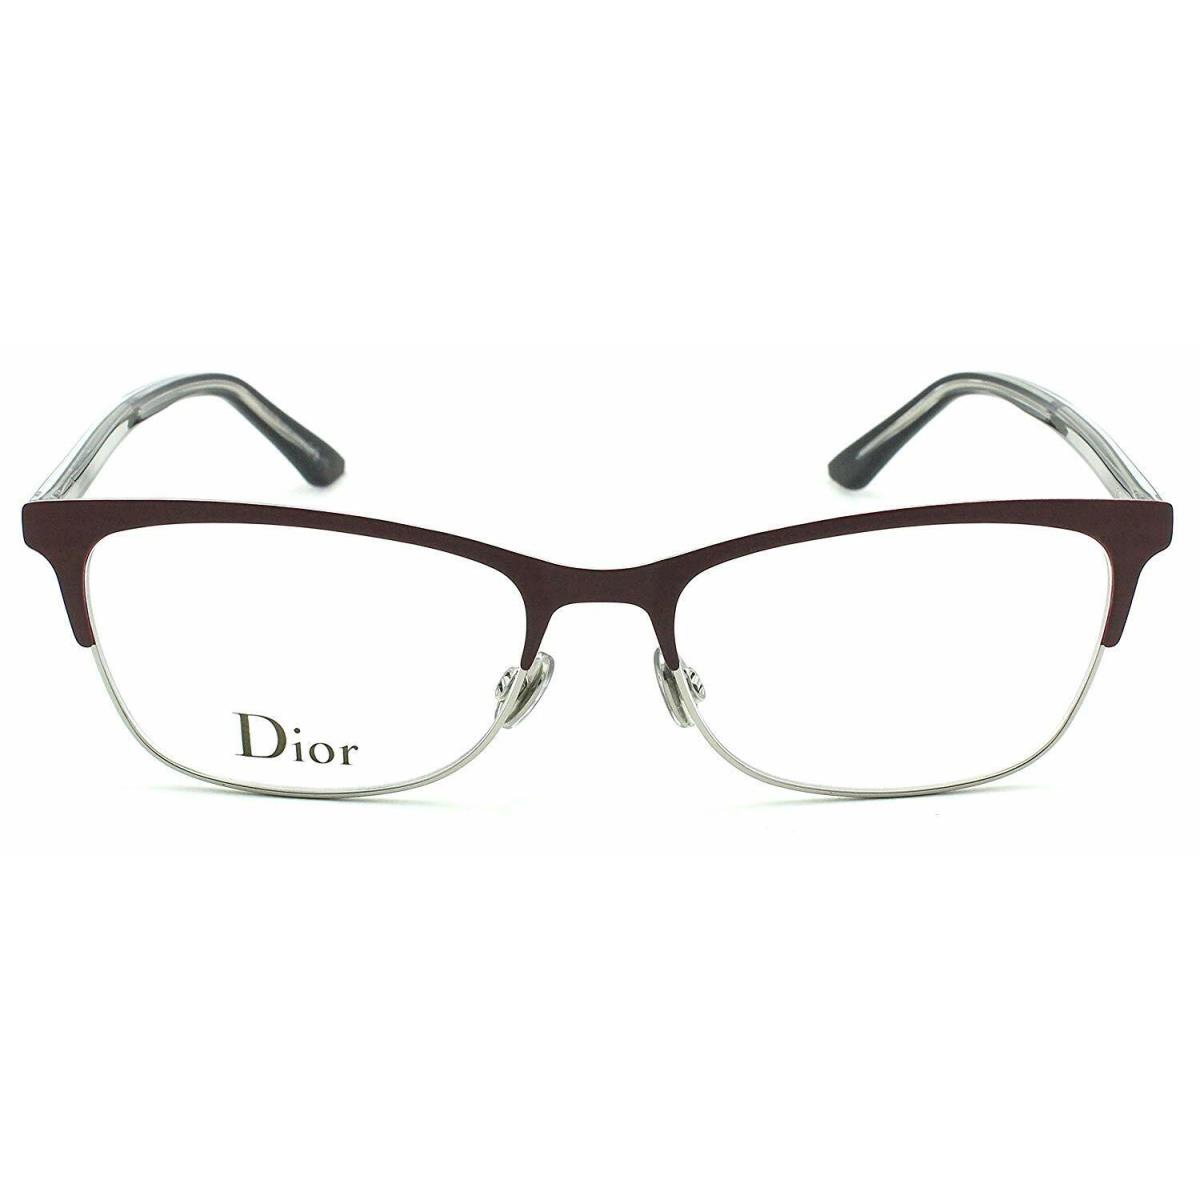 Christian Dior Montaigne No. 32 SF2 Matte Red Silver Eyeglasses Frame 56-16-145